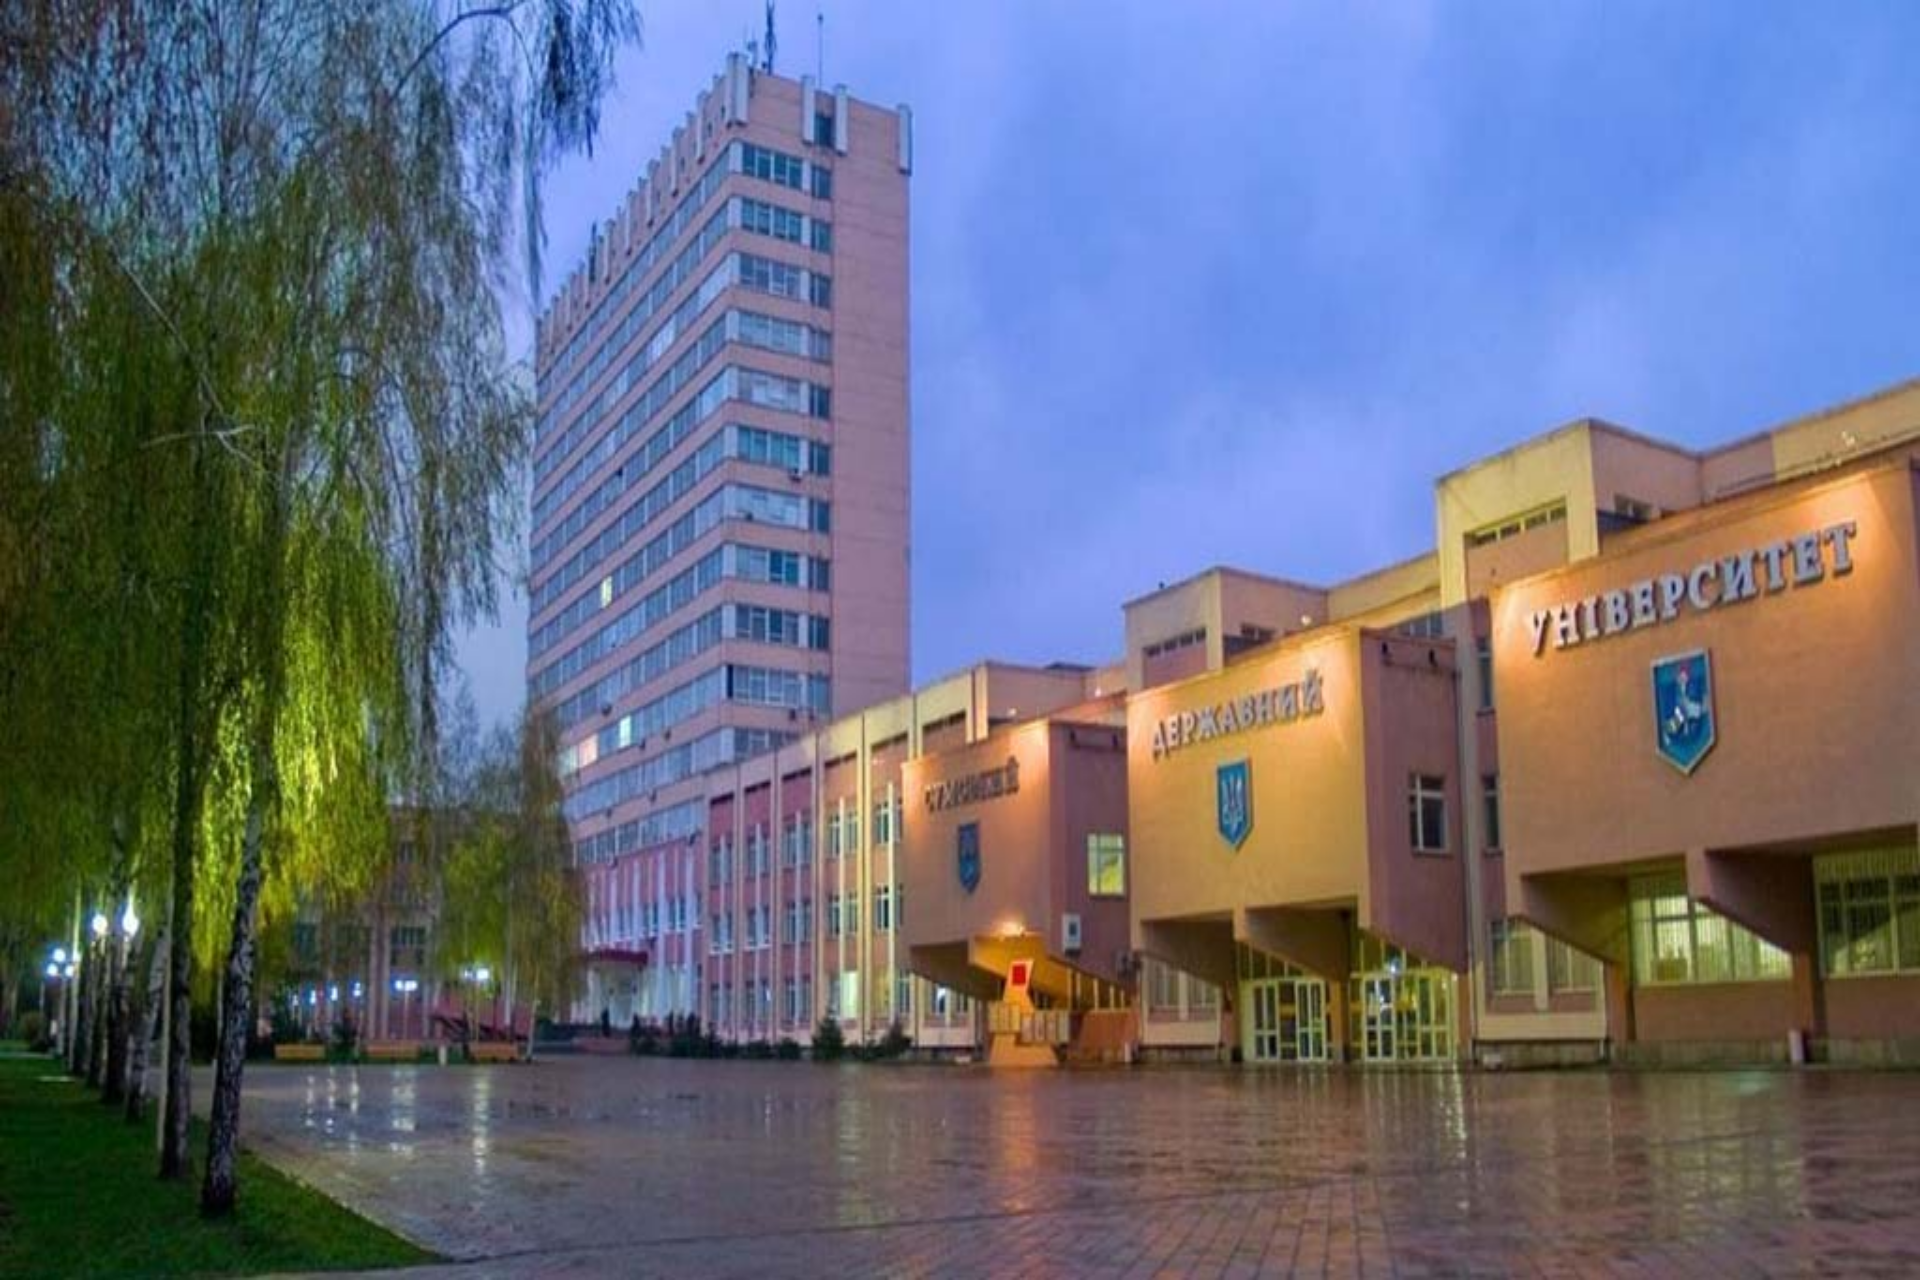 Study palace hub (MBBS in Ukraine)(Sumy State University)